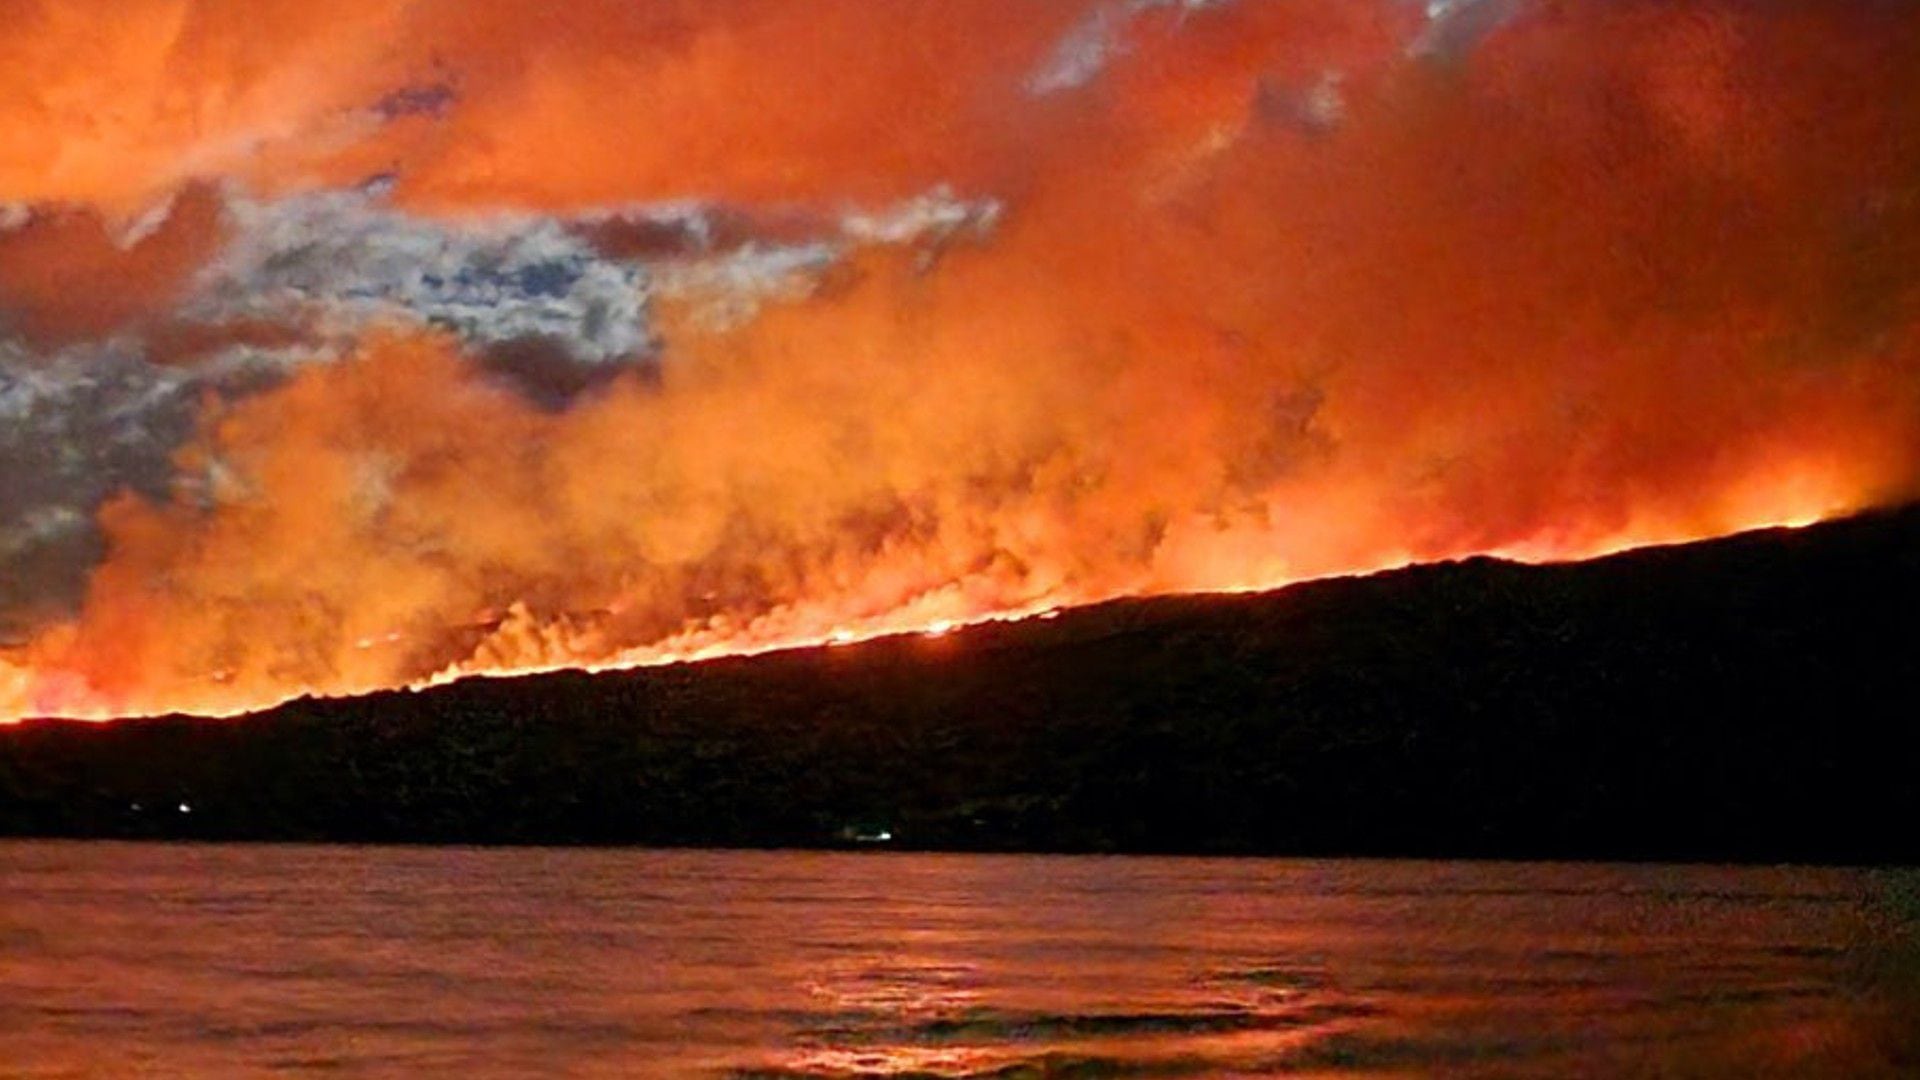 Incendio Chubut - Parque Nacional Los Alerces